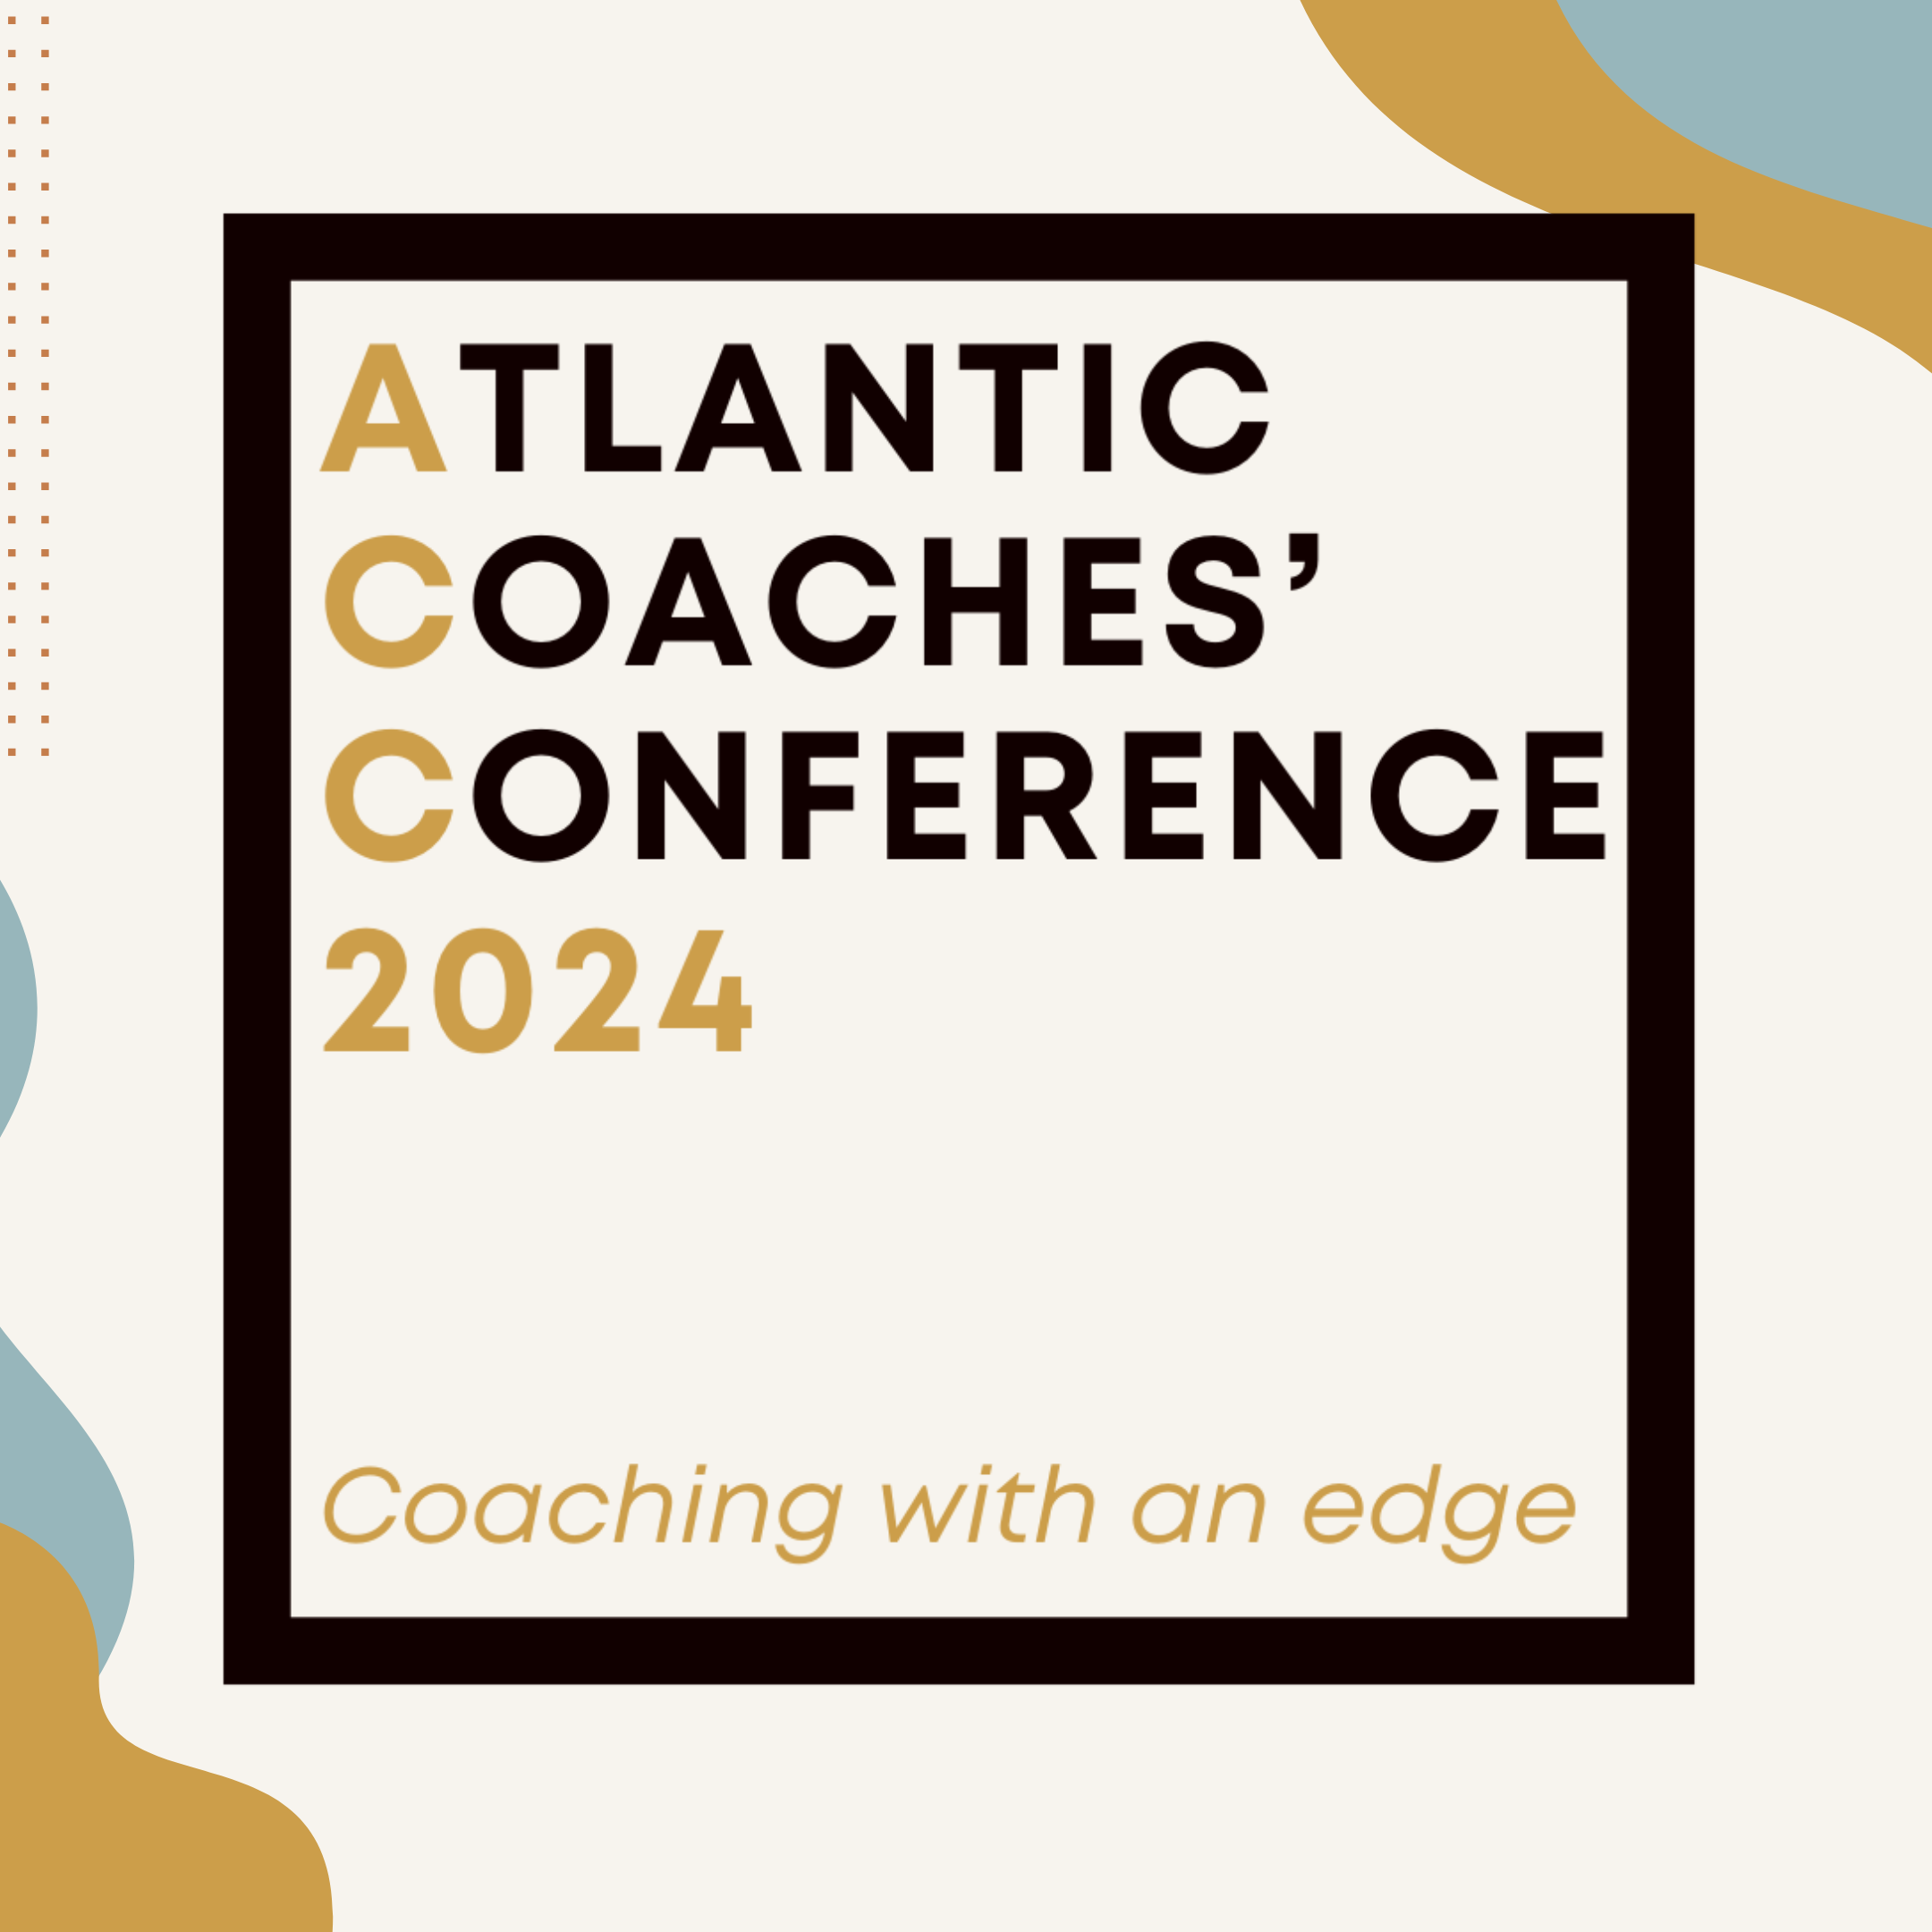 Atlantic Coaches' Conference